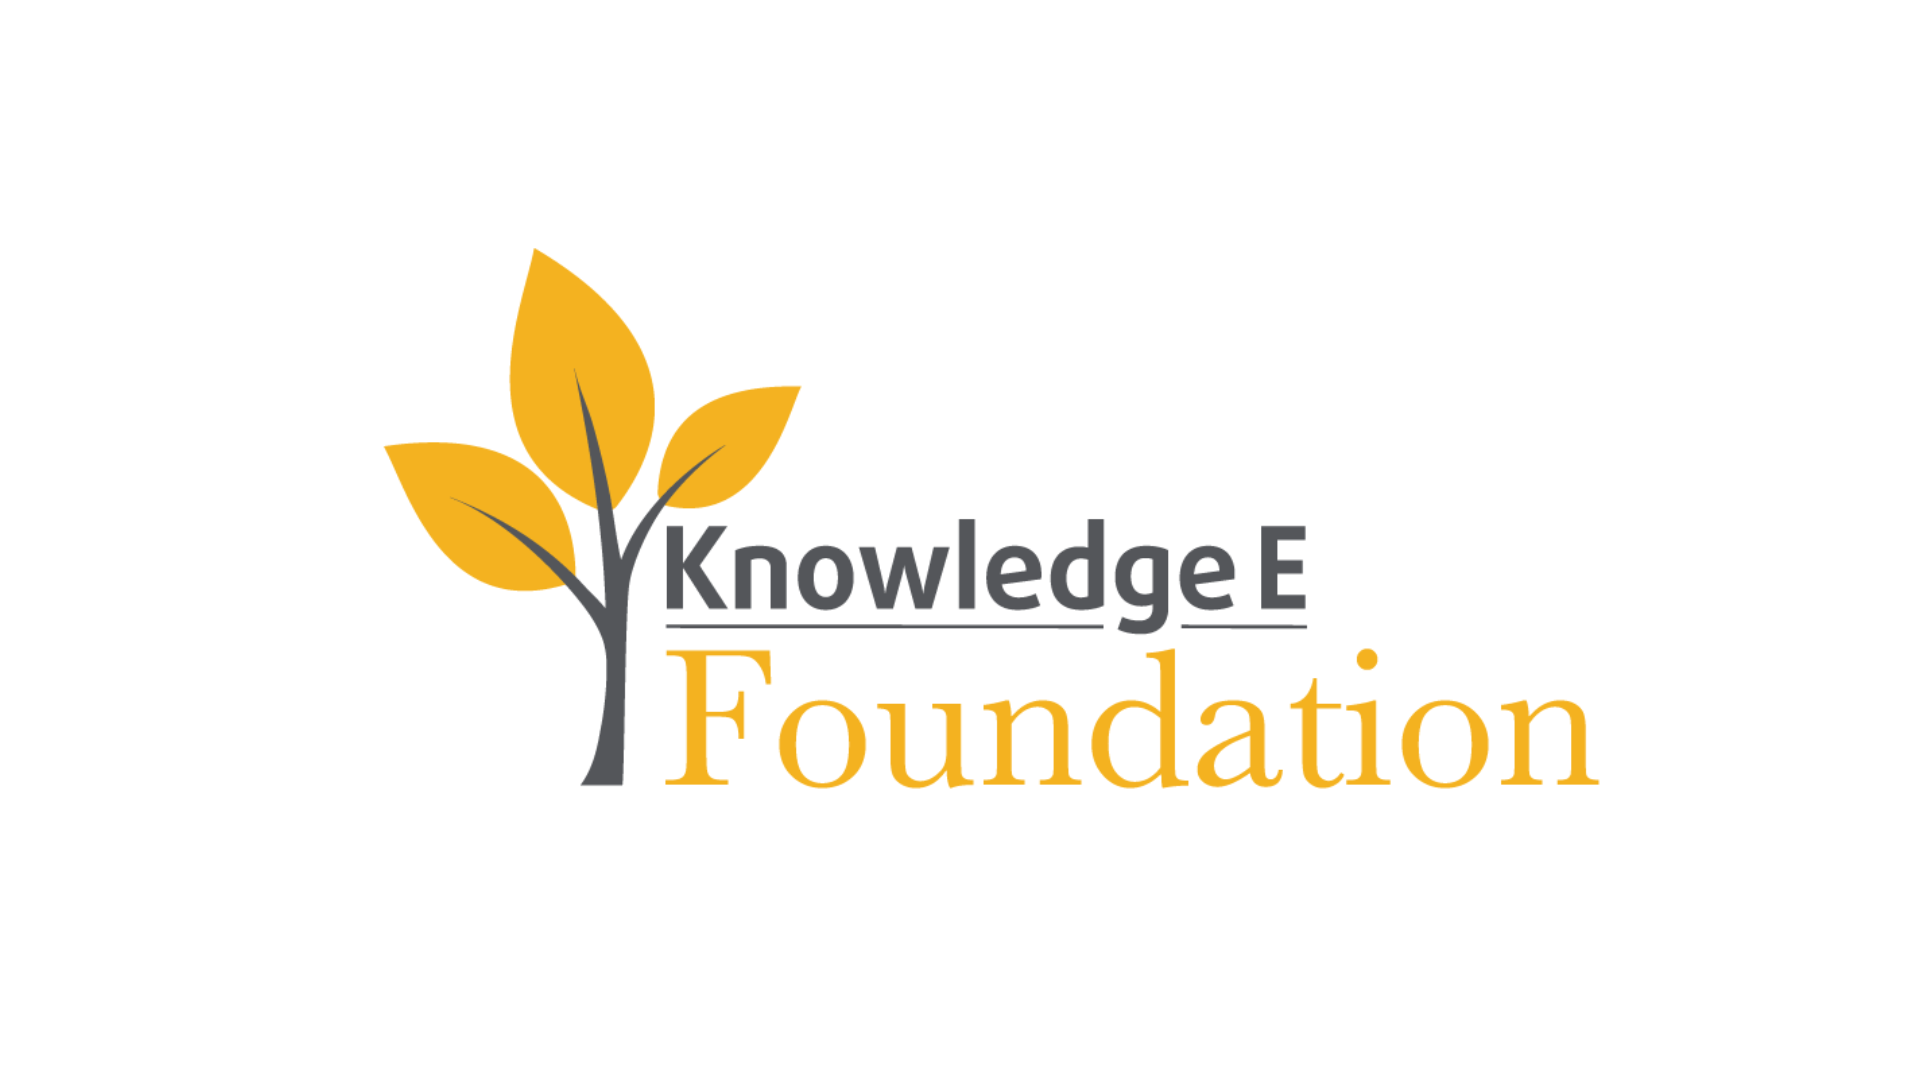 Knowledge E Foundation logo